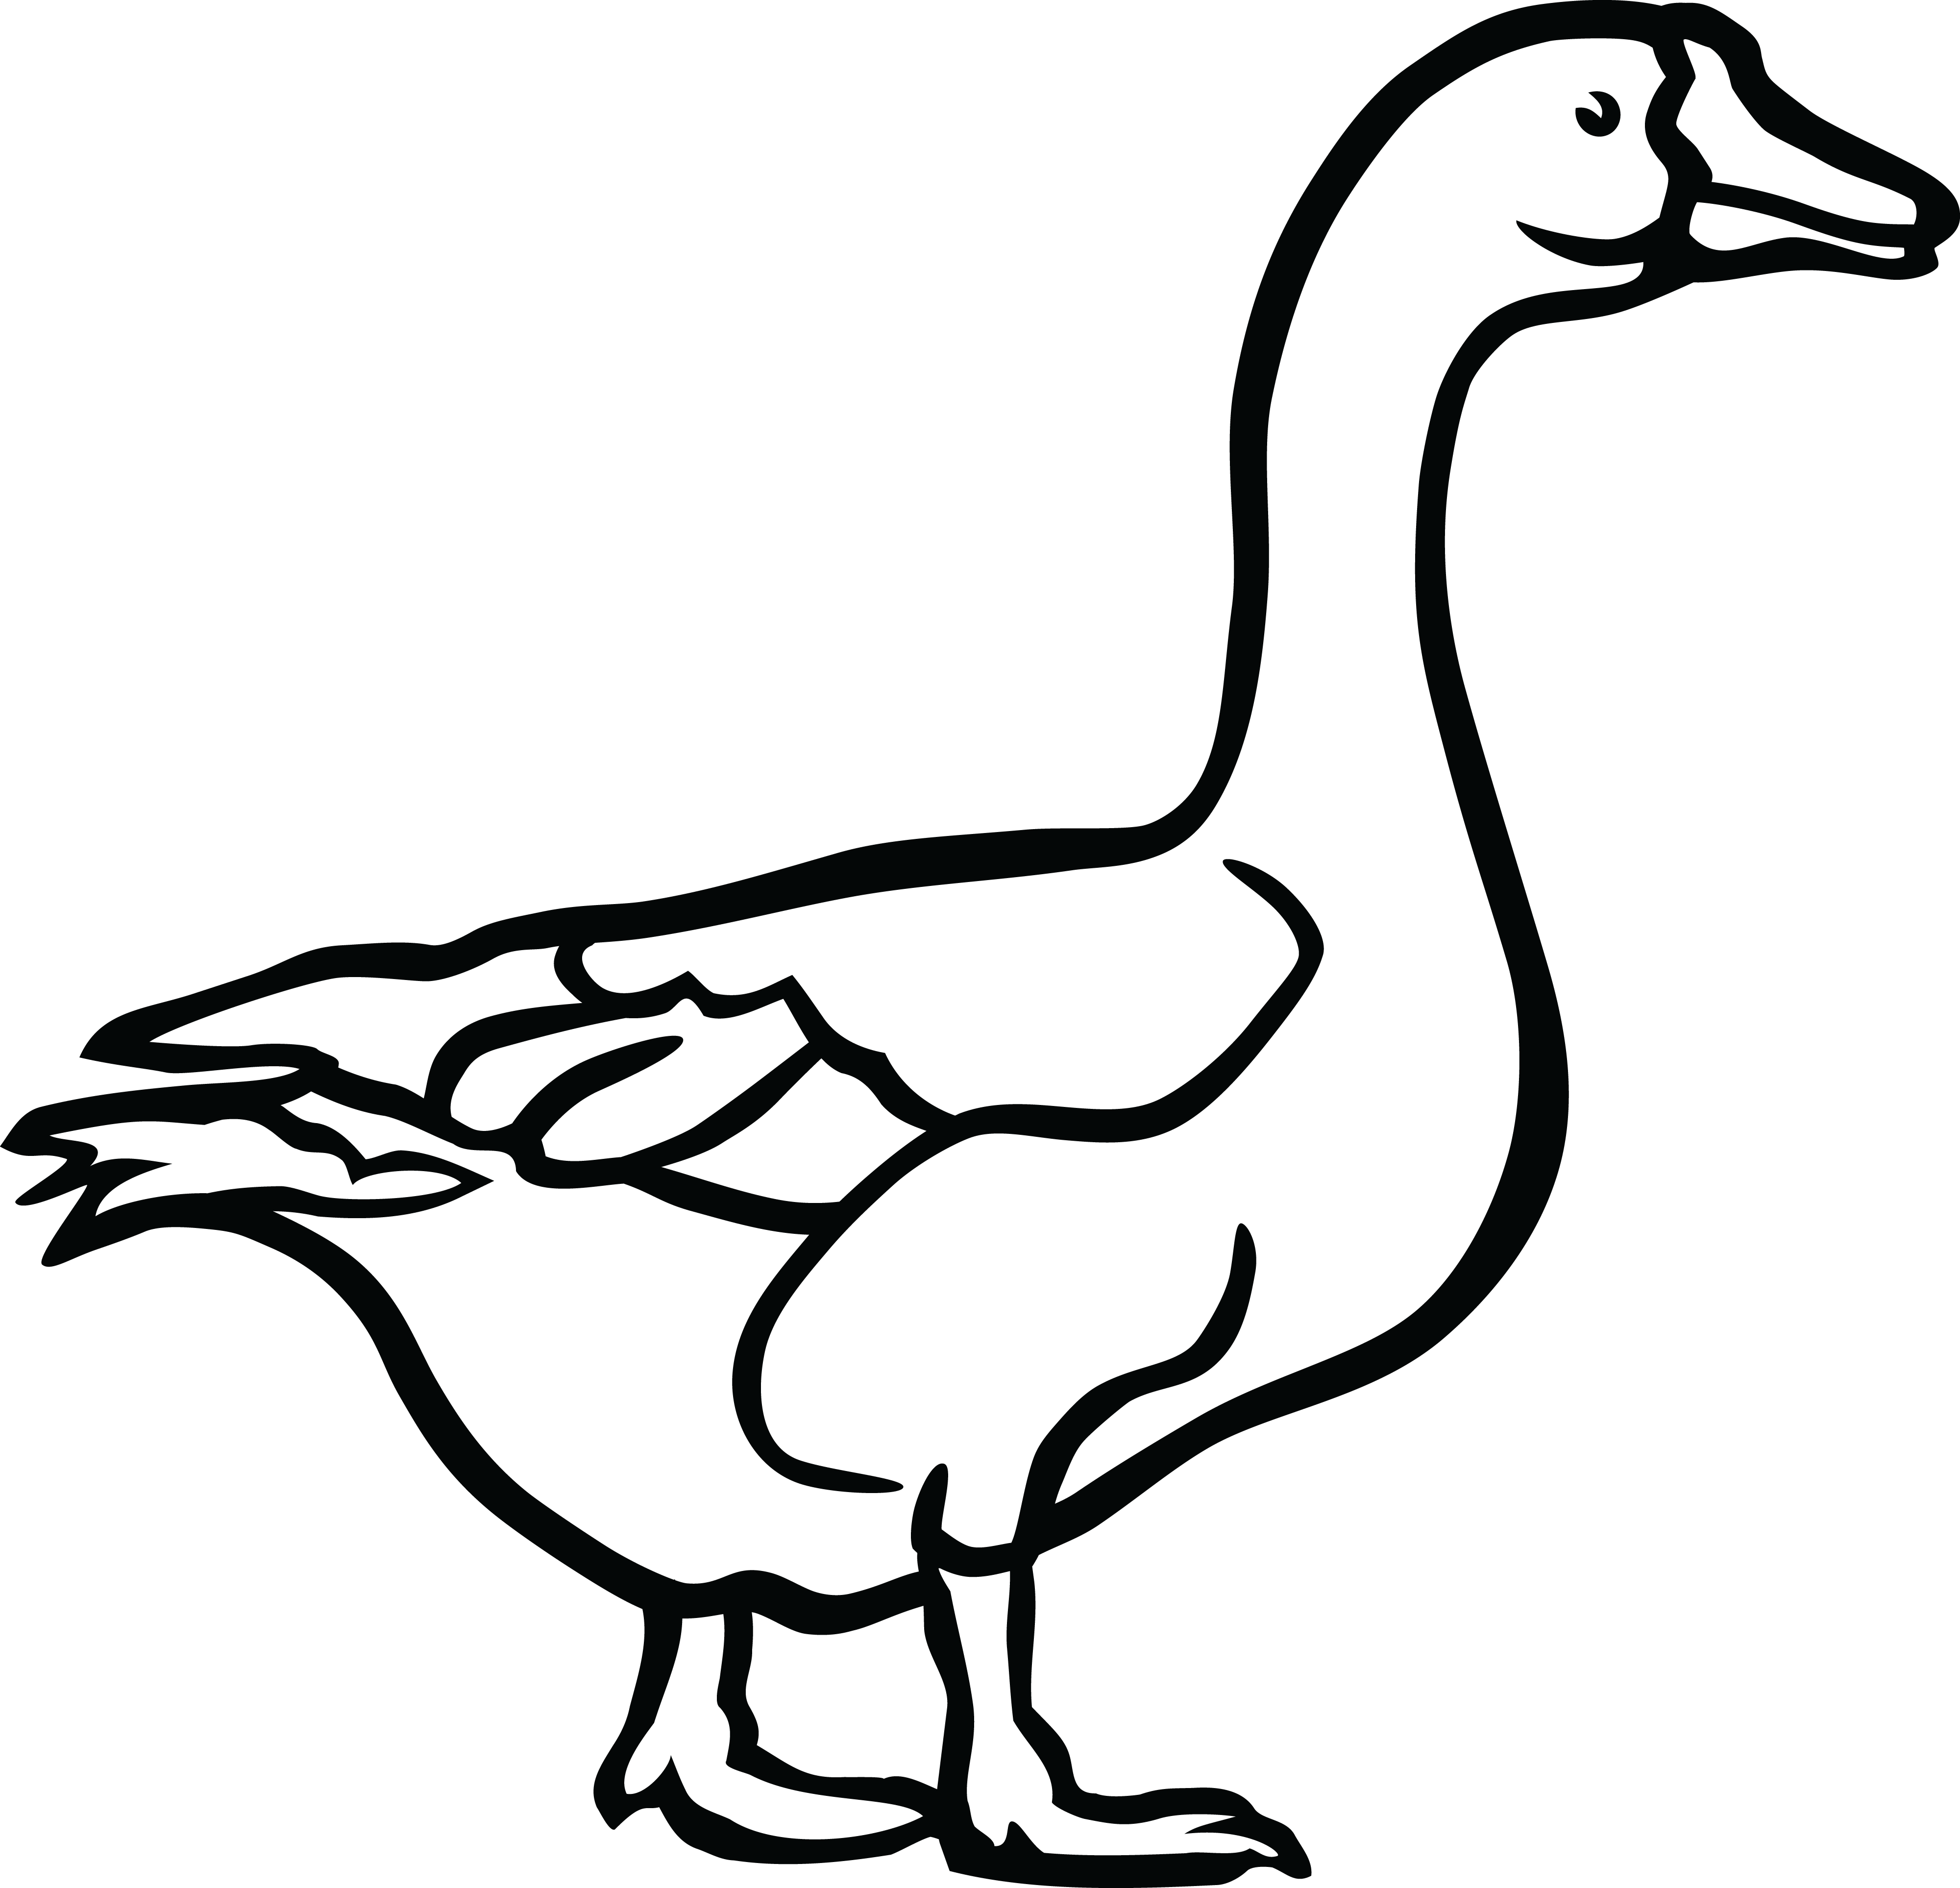 Ducks clipart black and white, Ducks black and white